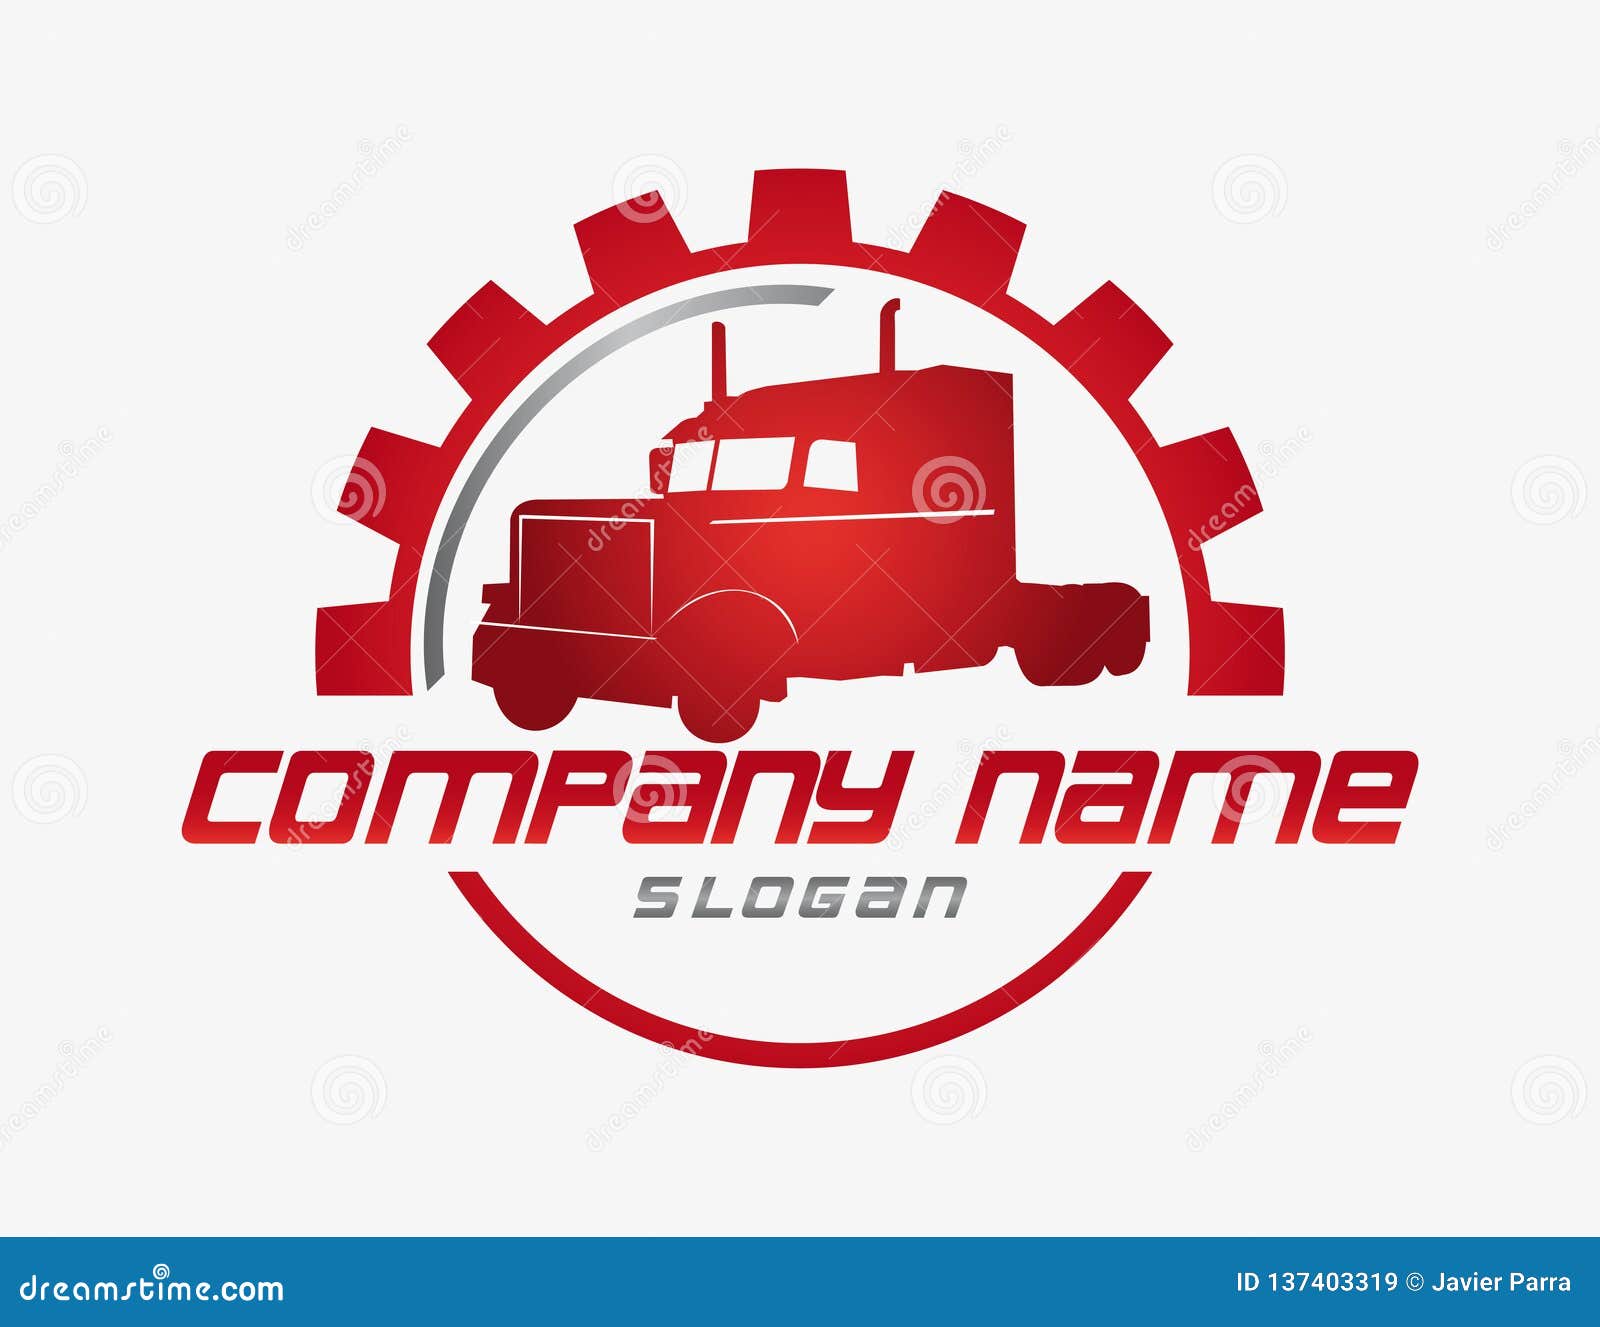 truck bussines logo